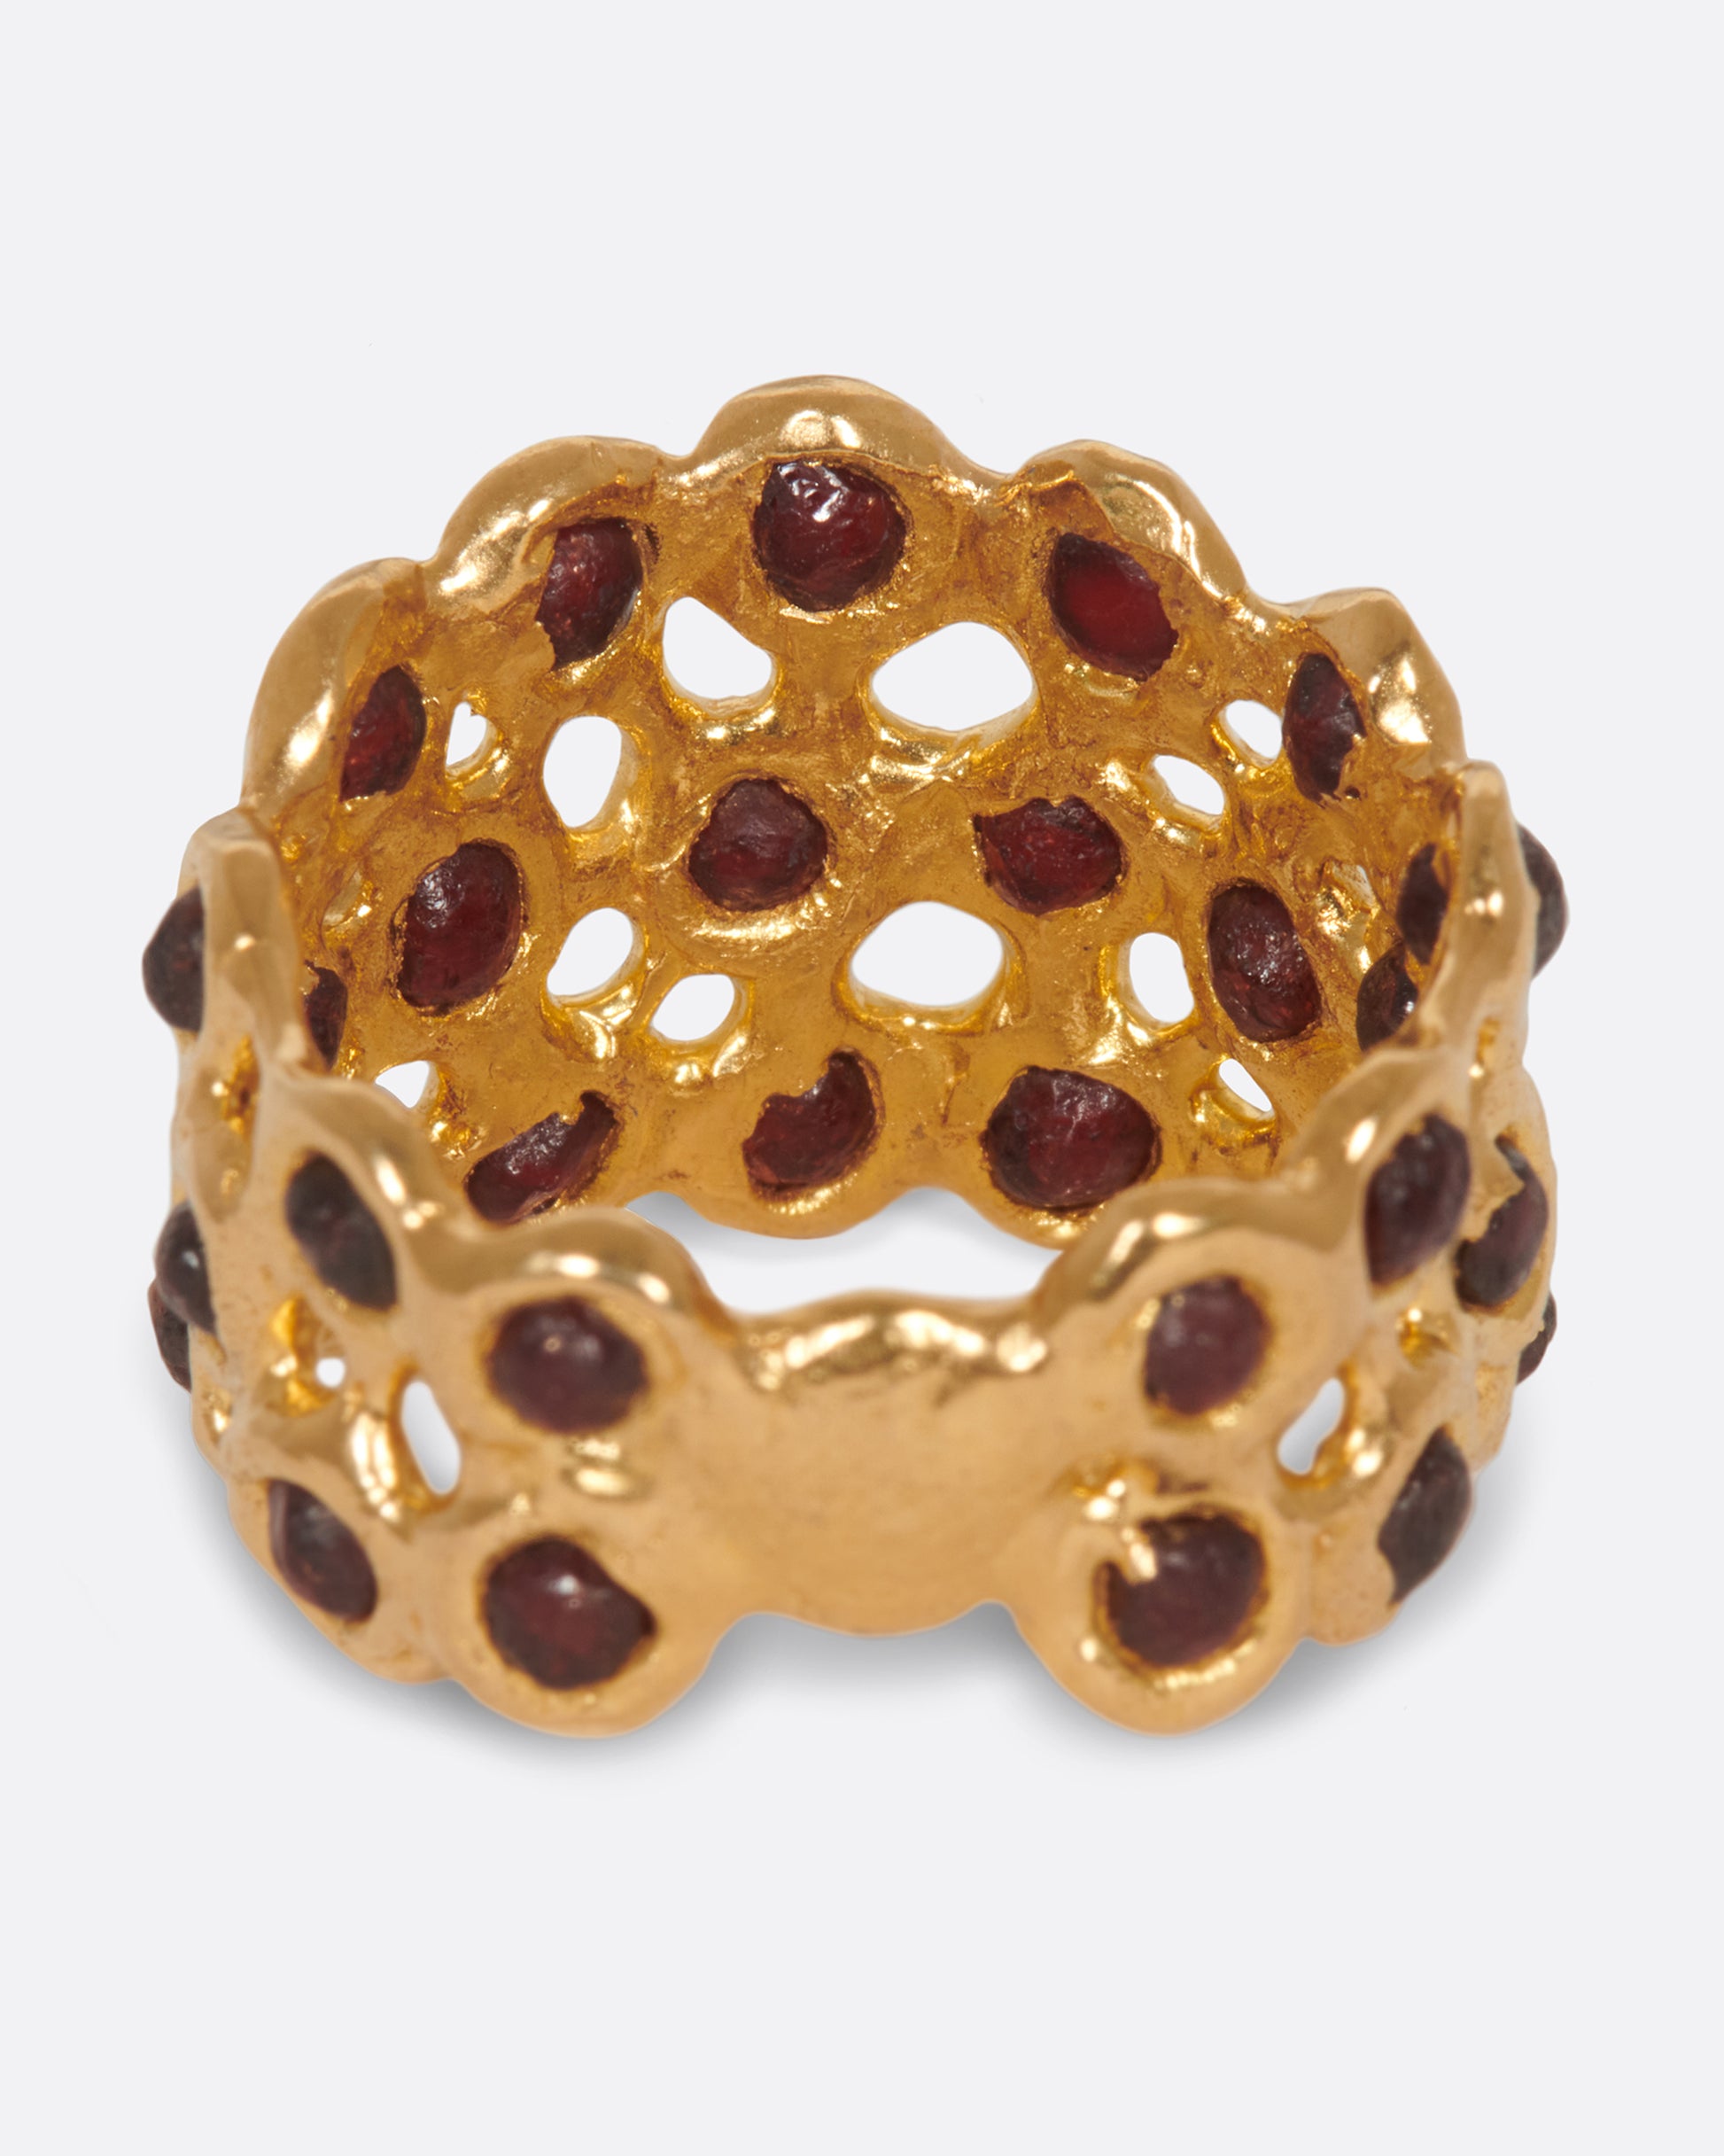 A ring made of a web of dark red garnet nuggets set in high karat gold bezels.